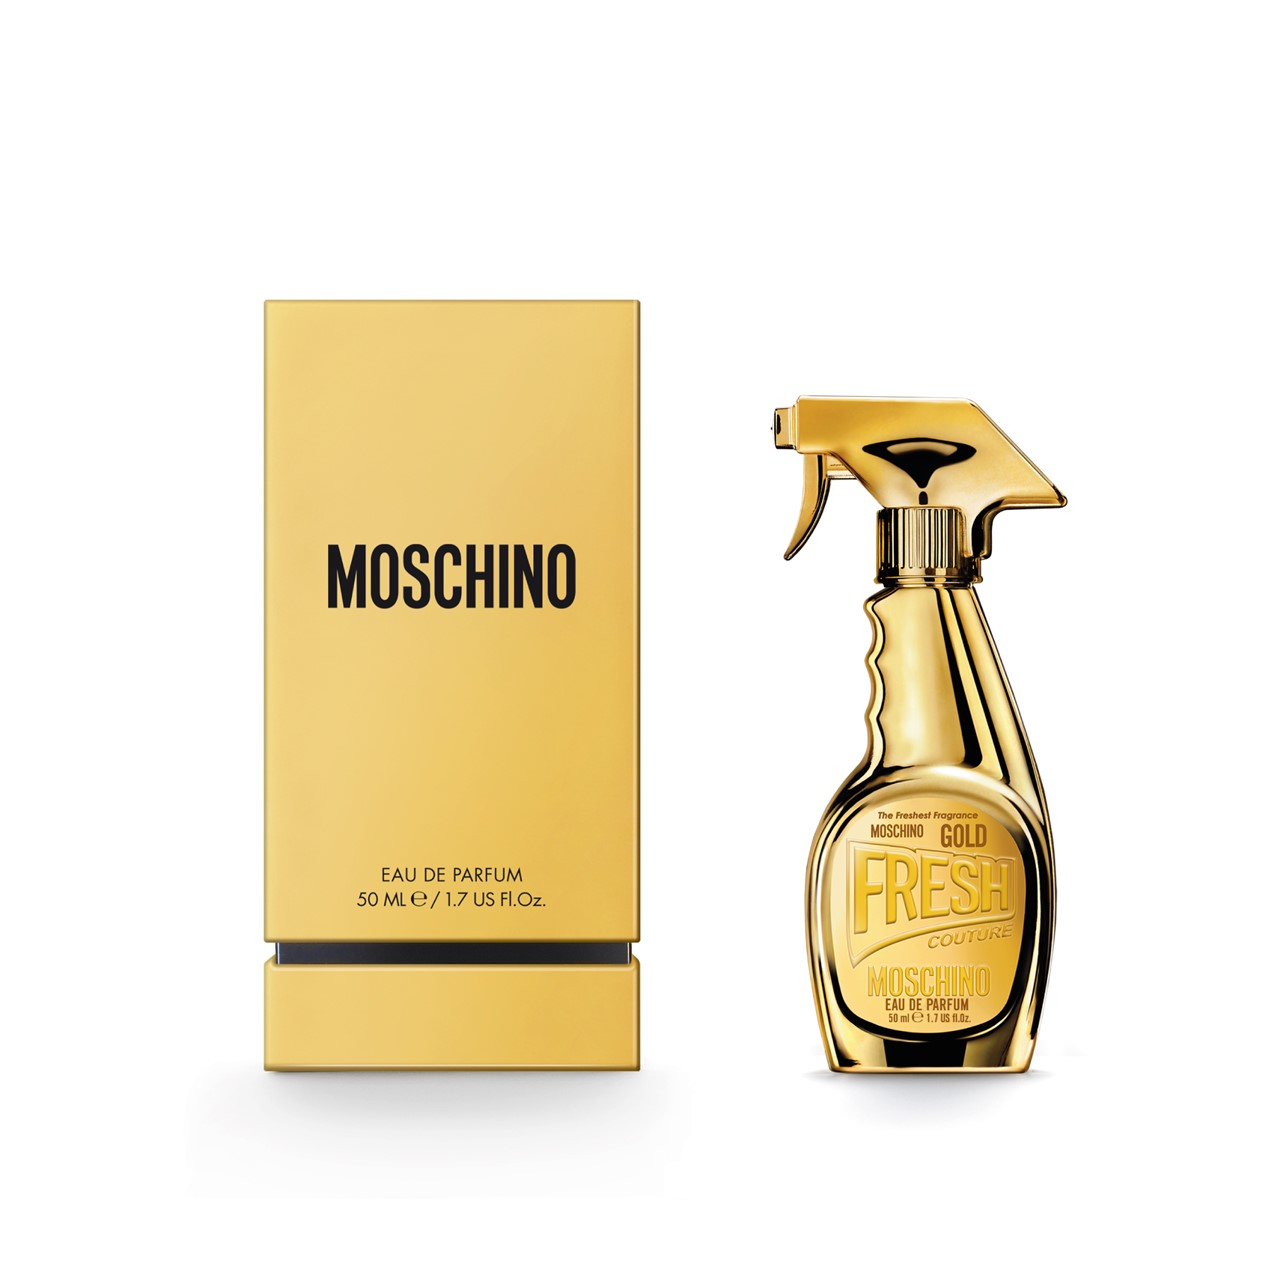 Moschino Gold Fresh Couture Eau de Parfum 50ml (1.7fl.oz.)